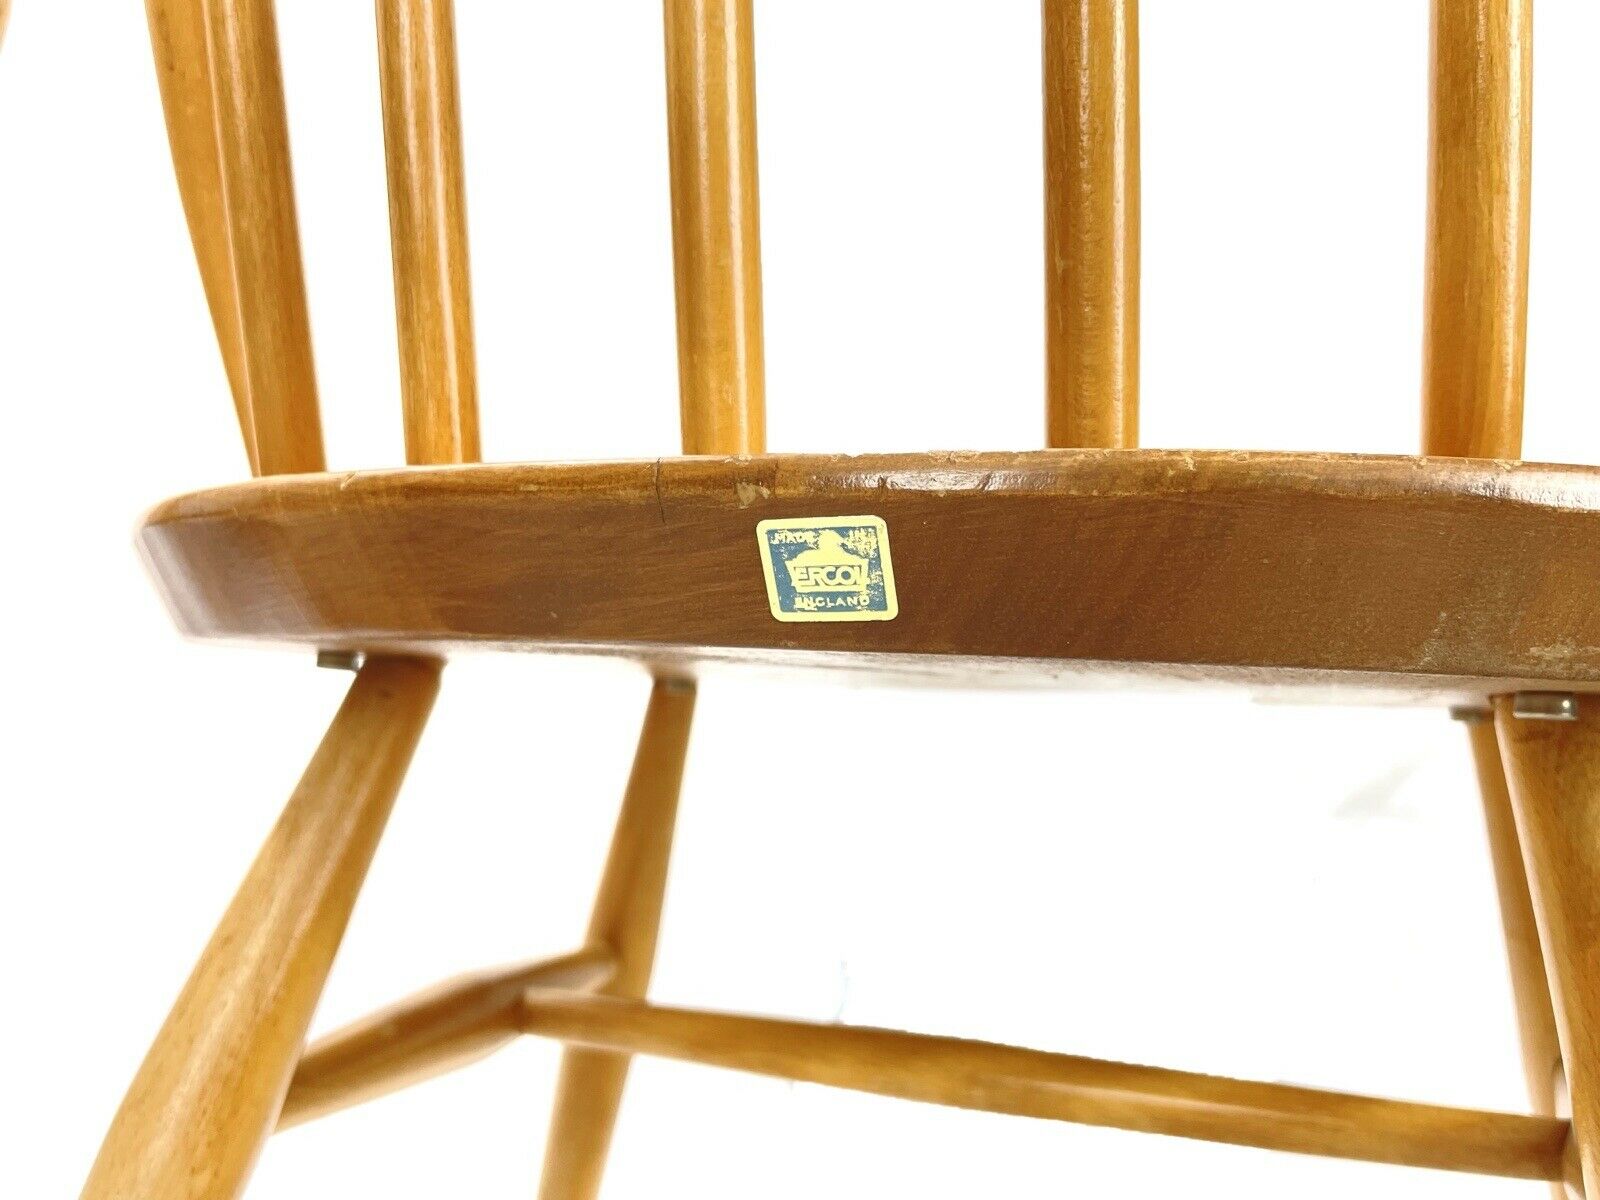 Ercol Quaker 365 & 365a, Set Of 4 Retro Dining Chairs